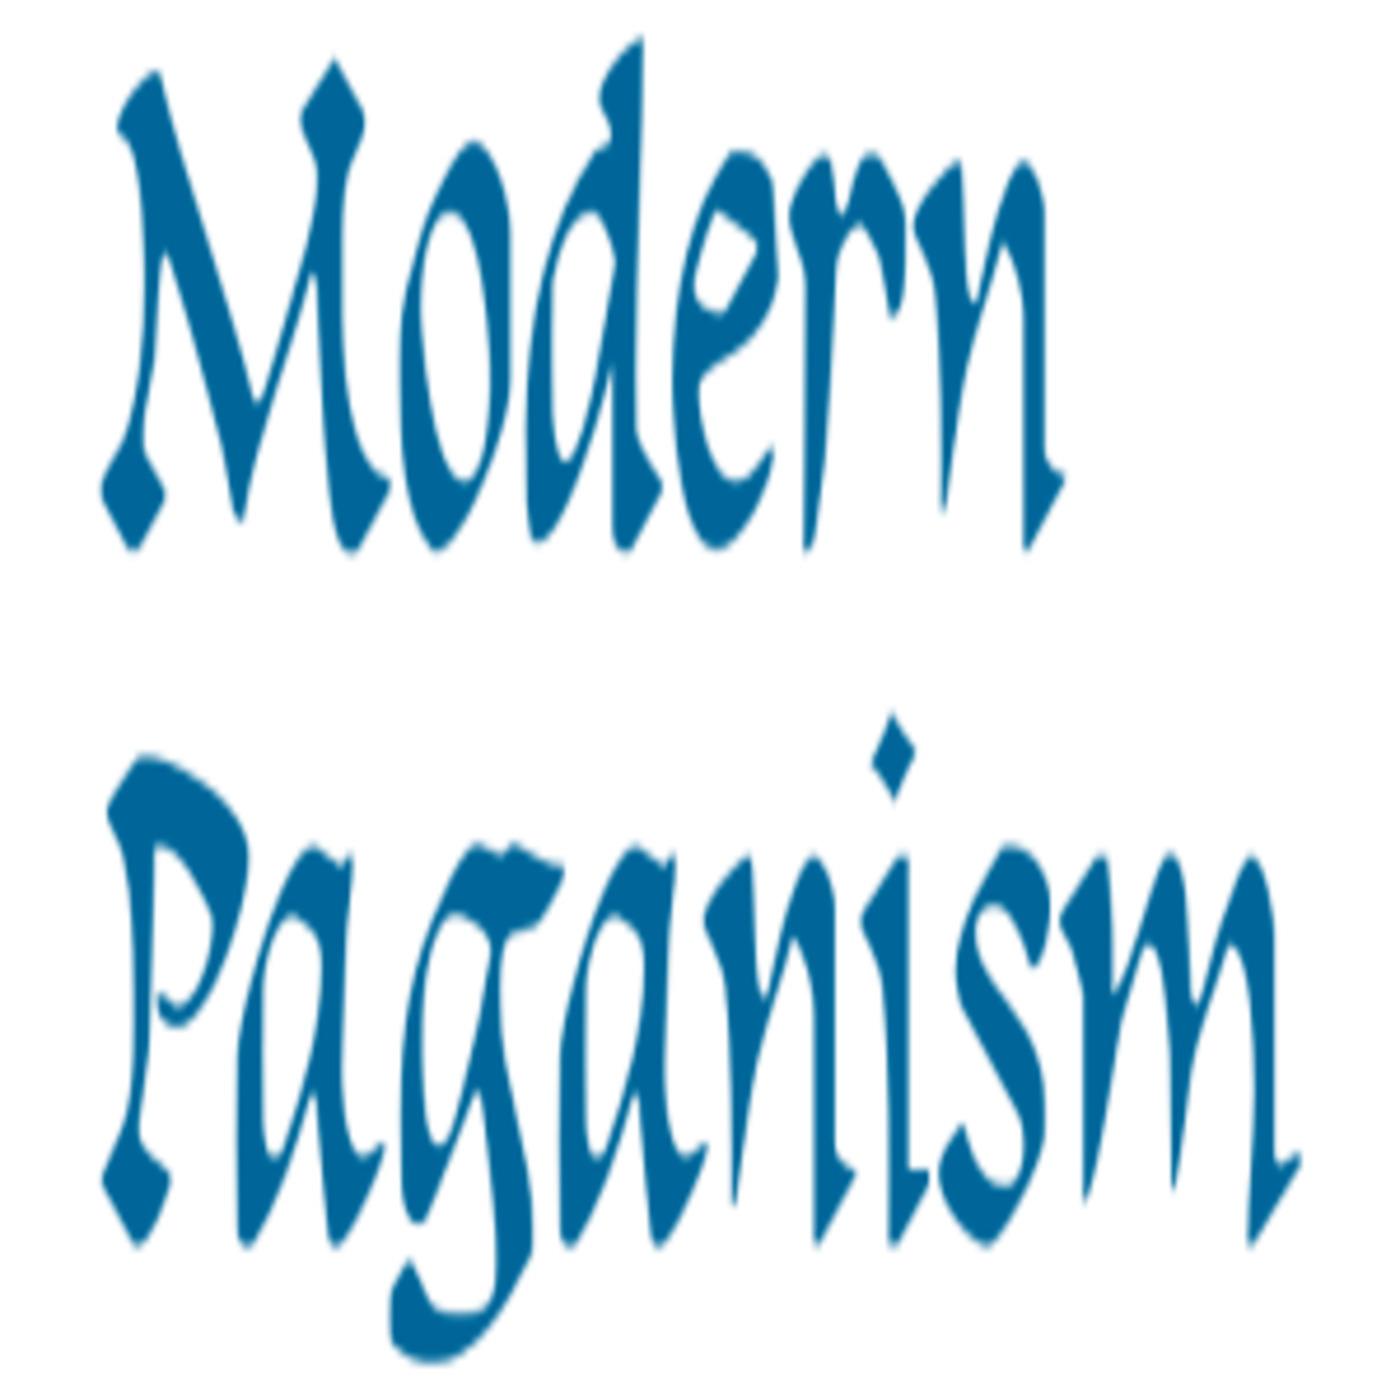 Modern Paganism